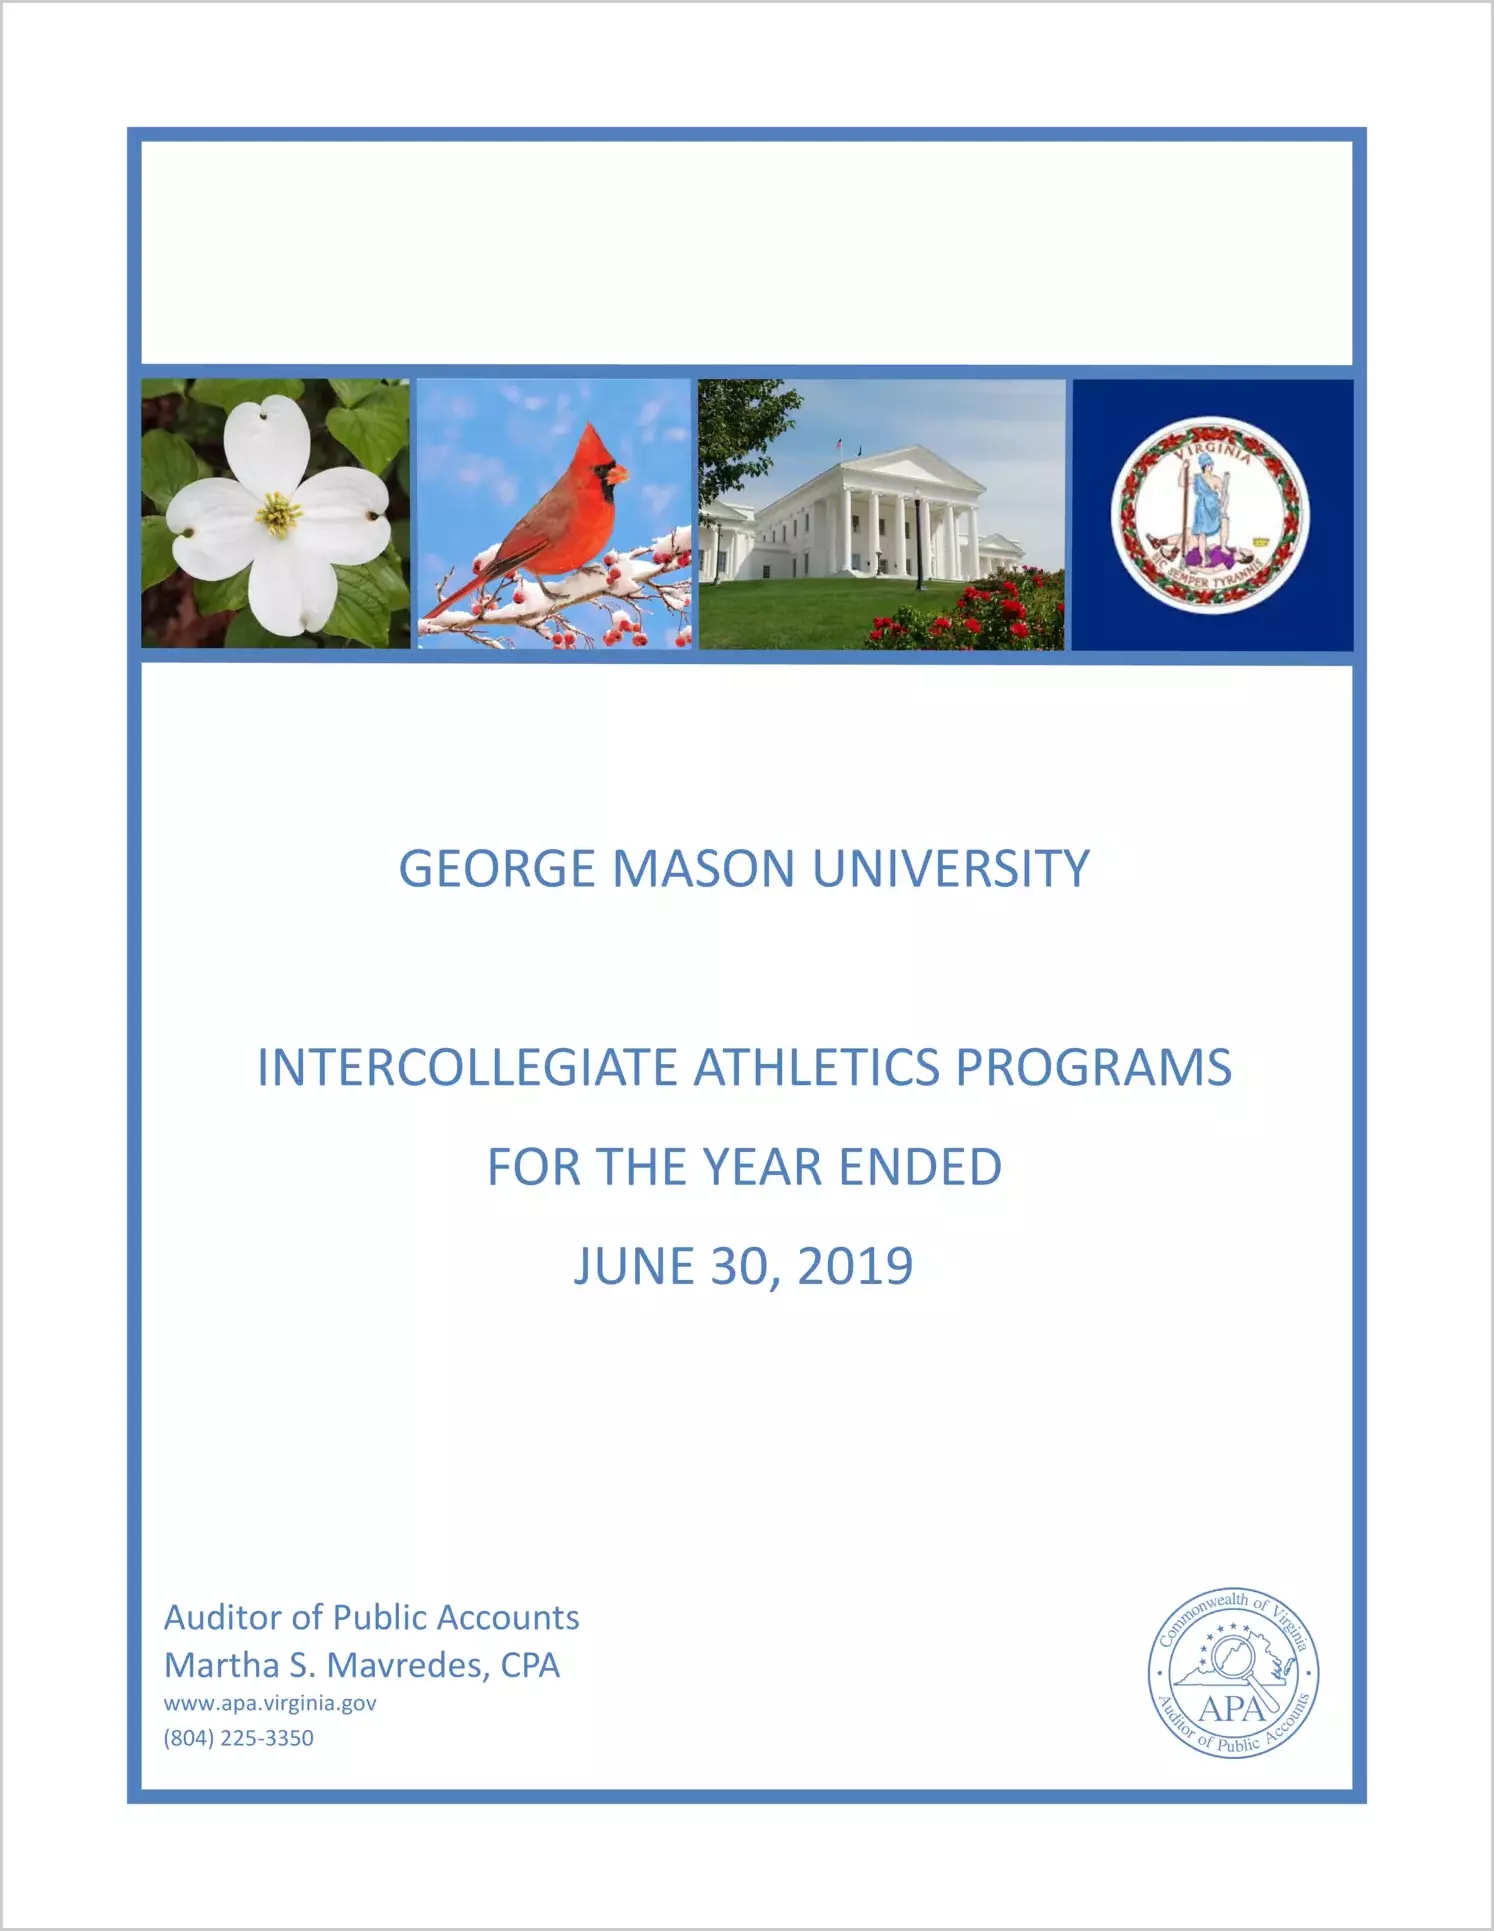 George Mason University Intercollegiate Athletics Programs for the year ended June 30, 2019